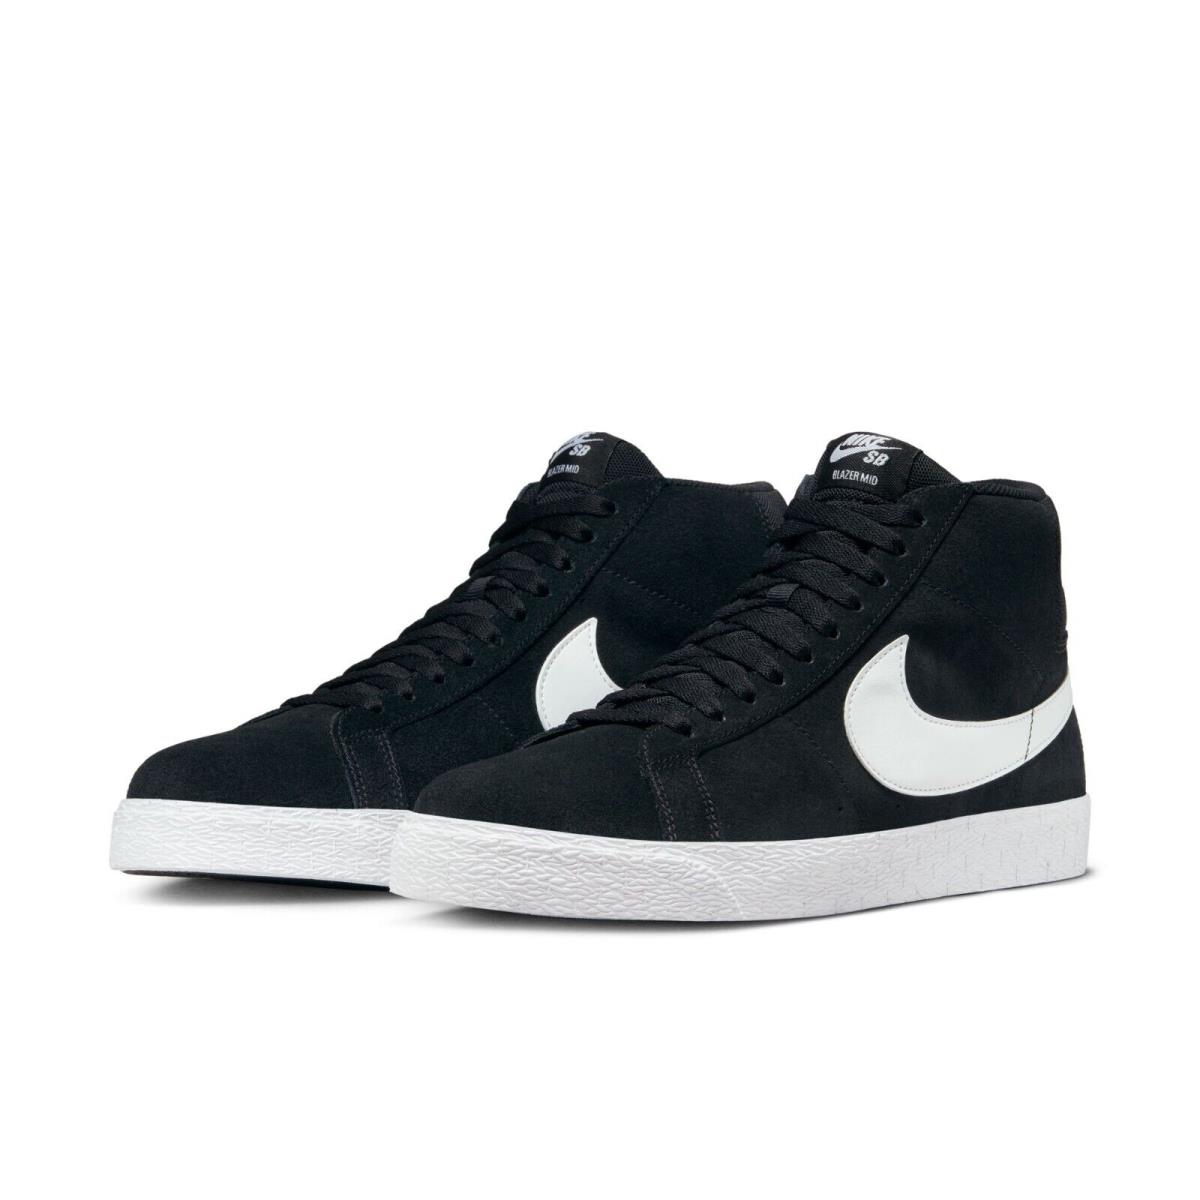 Nike SB Zoom Blazer Mid Shoes - Black/white - Sizes 8-11